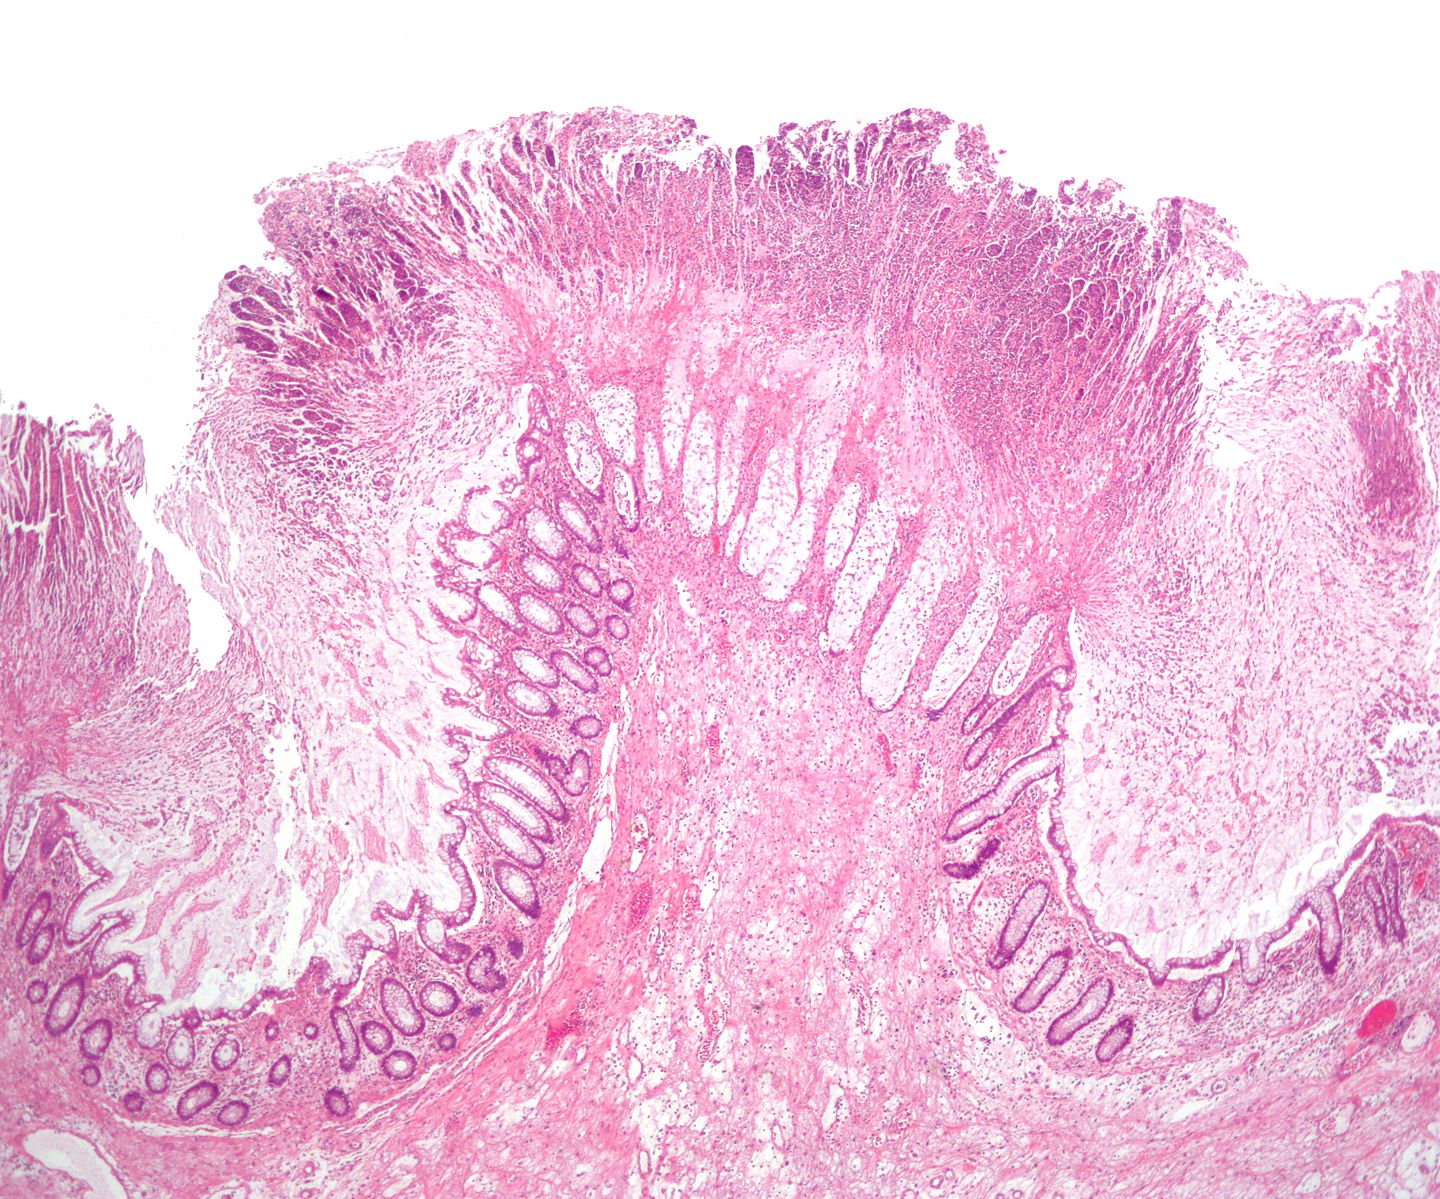 Pseudomembranous colitis. H& E staining showing pseudomembranes in Clostridium colitis [48]